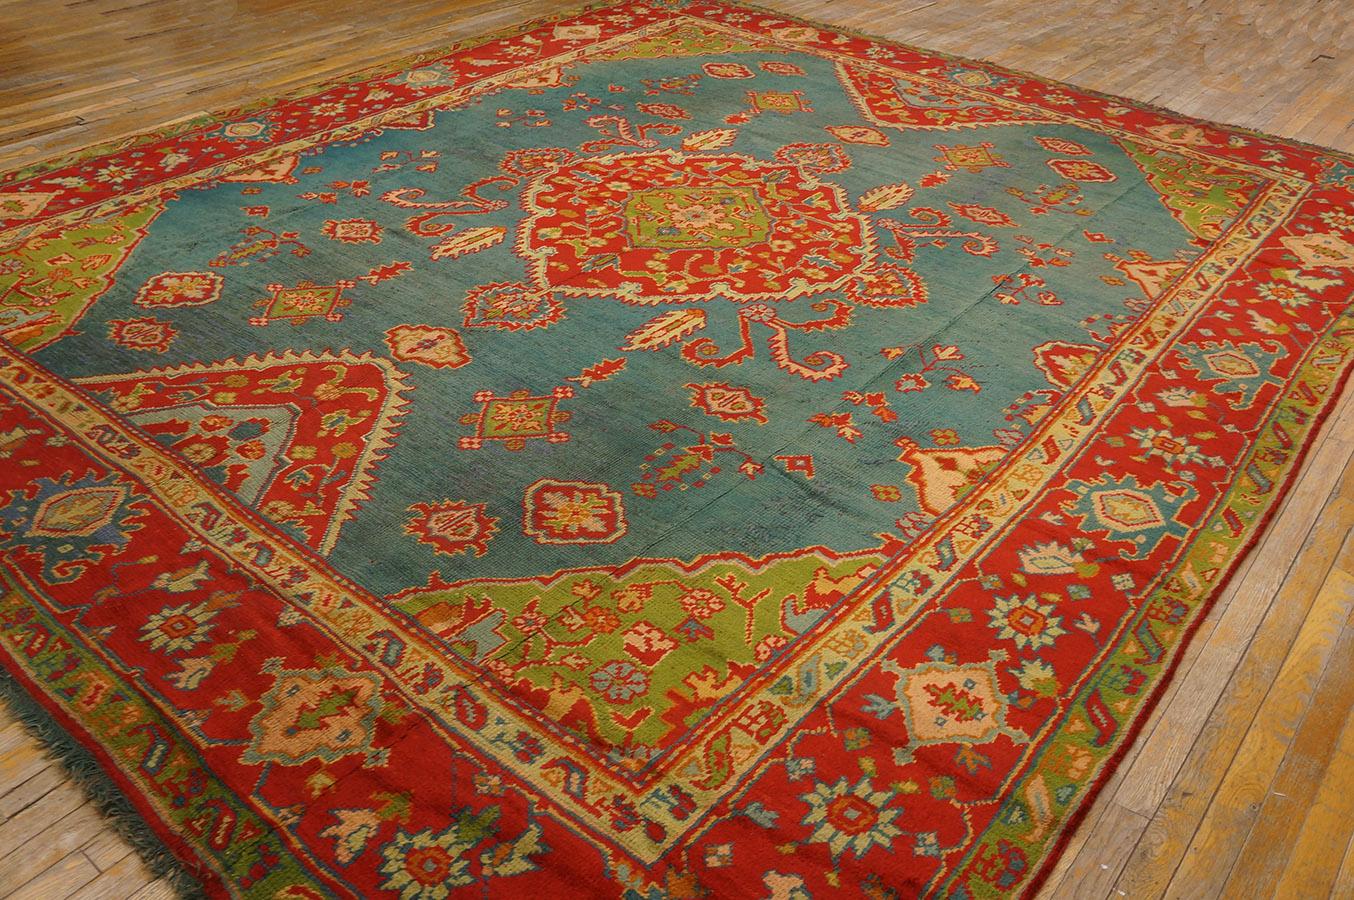 Late 19th Century Turkish Oushak Carpet ( 11' 2'' x 13' 1'' - 340 x 398 cm ) For Sale 1